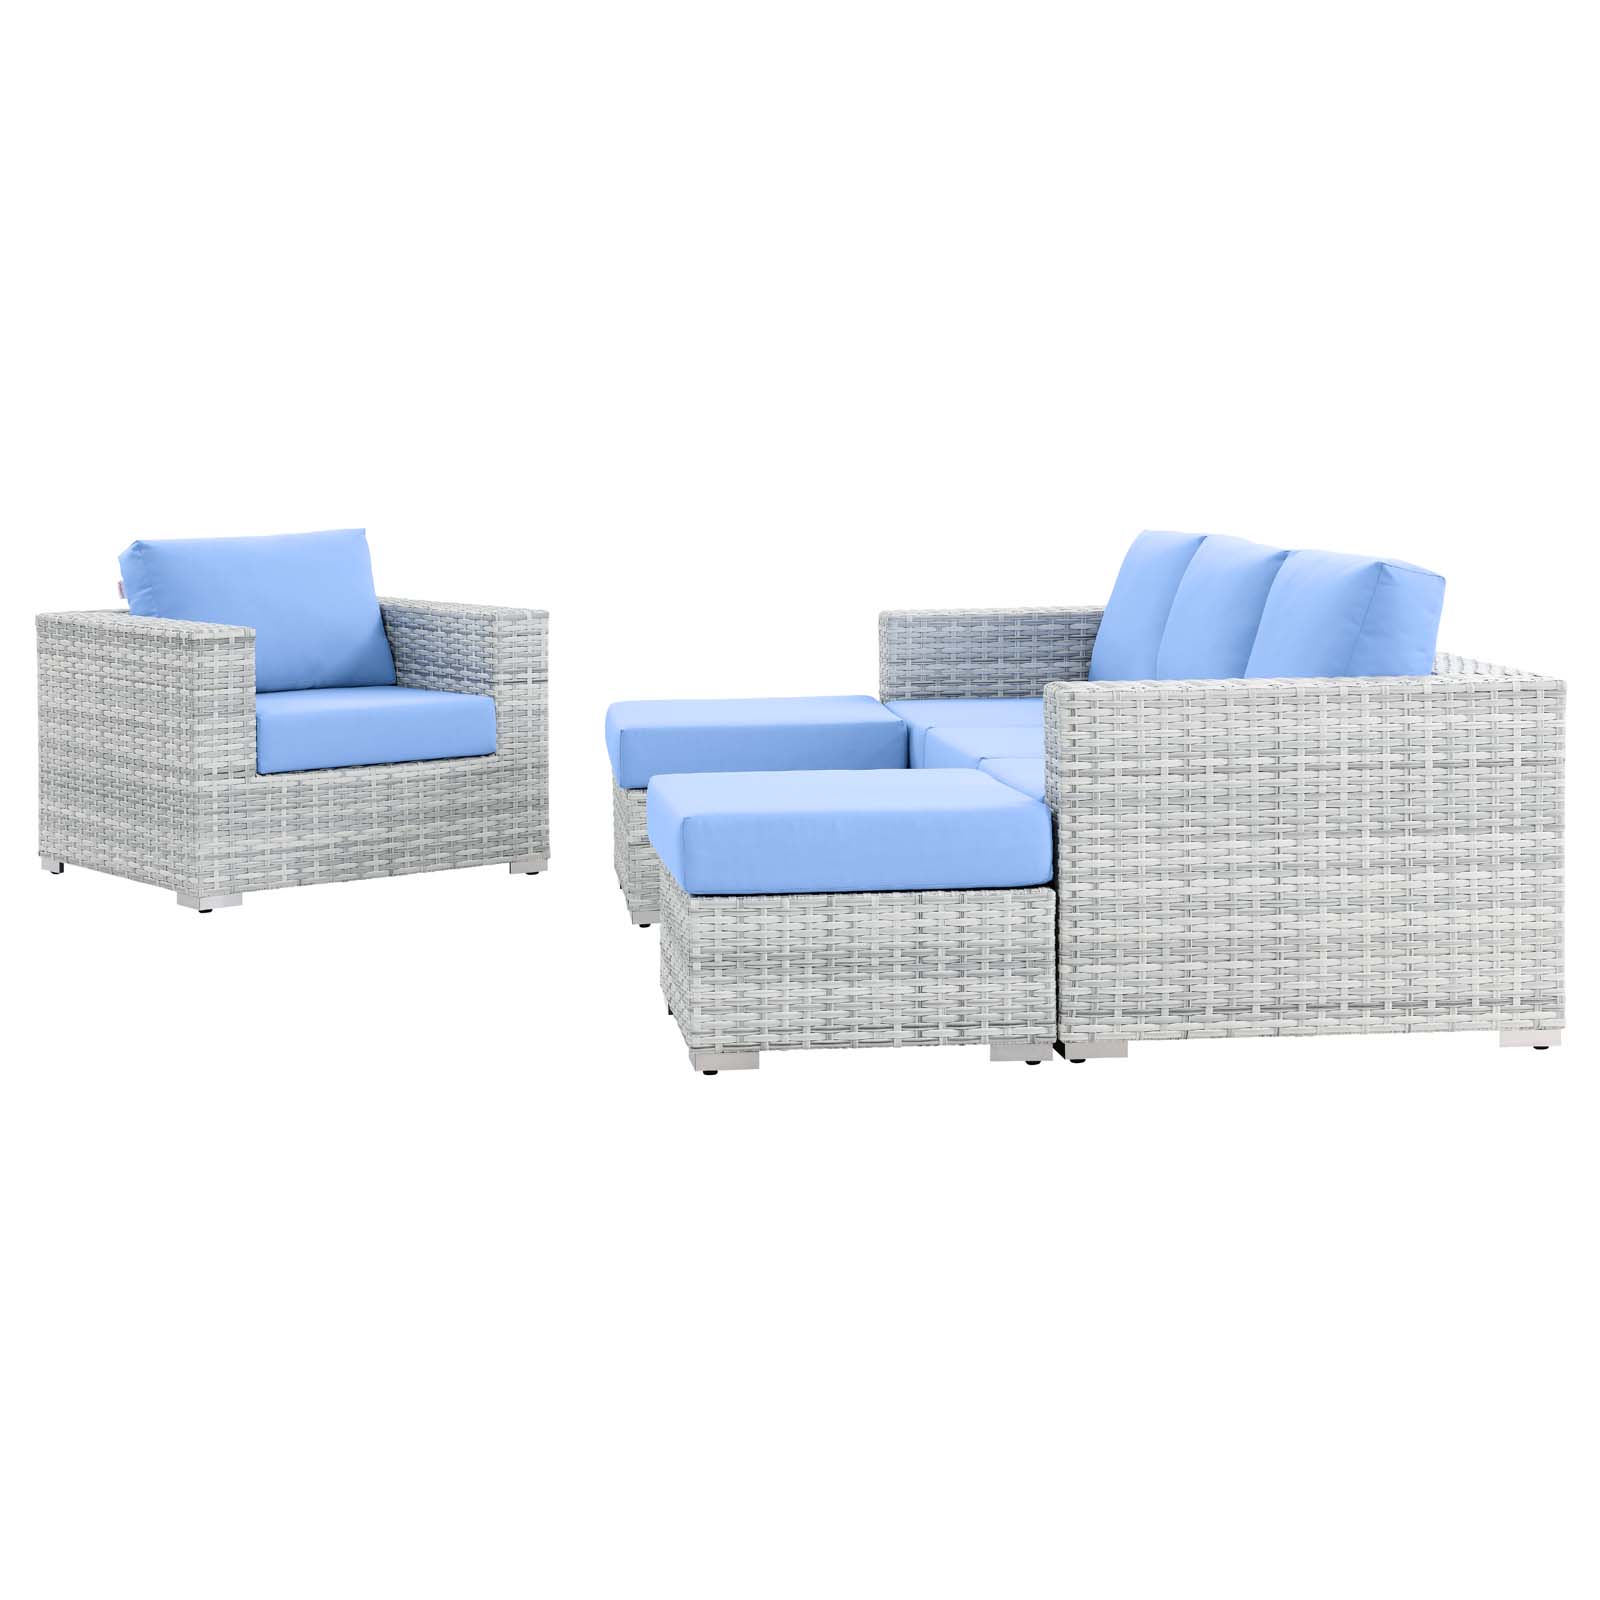 Lounge Sectional Sofa Chair Set, Rattan, Wicker, Light Grey Gray Light Blue, Modern Contemporary Urban Design, Outdoor Patio Balcony Cafe Bistro Garden Furniture Hotel Hospitality - image 3 of 10